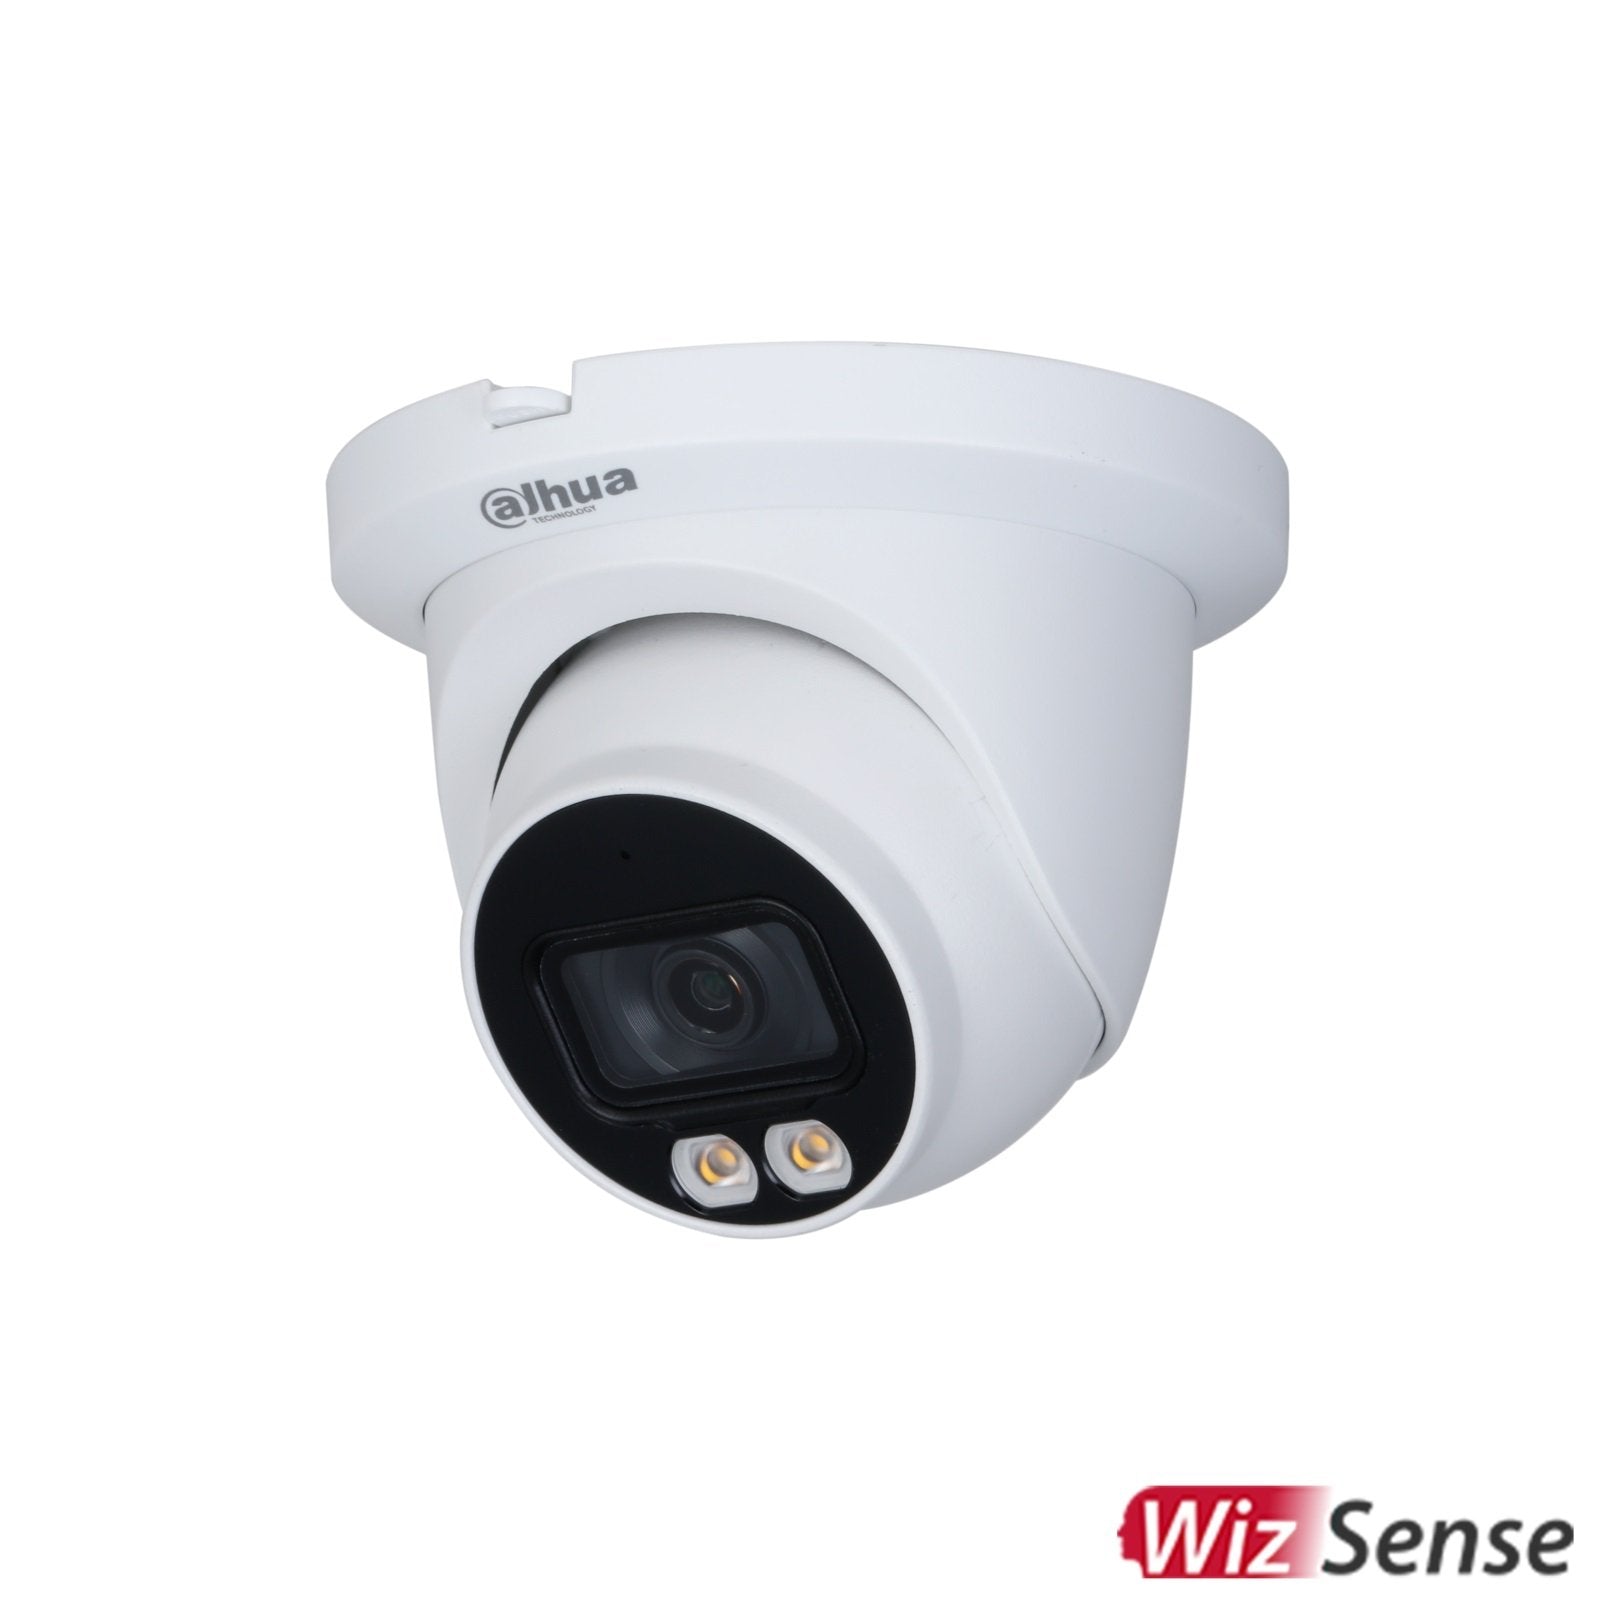 Dahua* 4MP IP WizSense AI Series Full Colour Eyeball Camera, SMD, Perimeter, Starlight, 2.8mm, 120dB WDR, 30m White Light, POE / 12VDC, IP67, MicroSD, Built-in Mic (Wall Mount: PFB203W, Junction Box: PFA130-E)